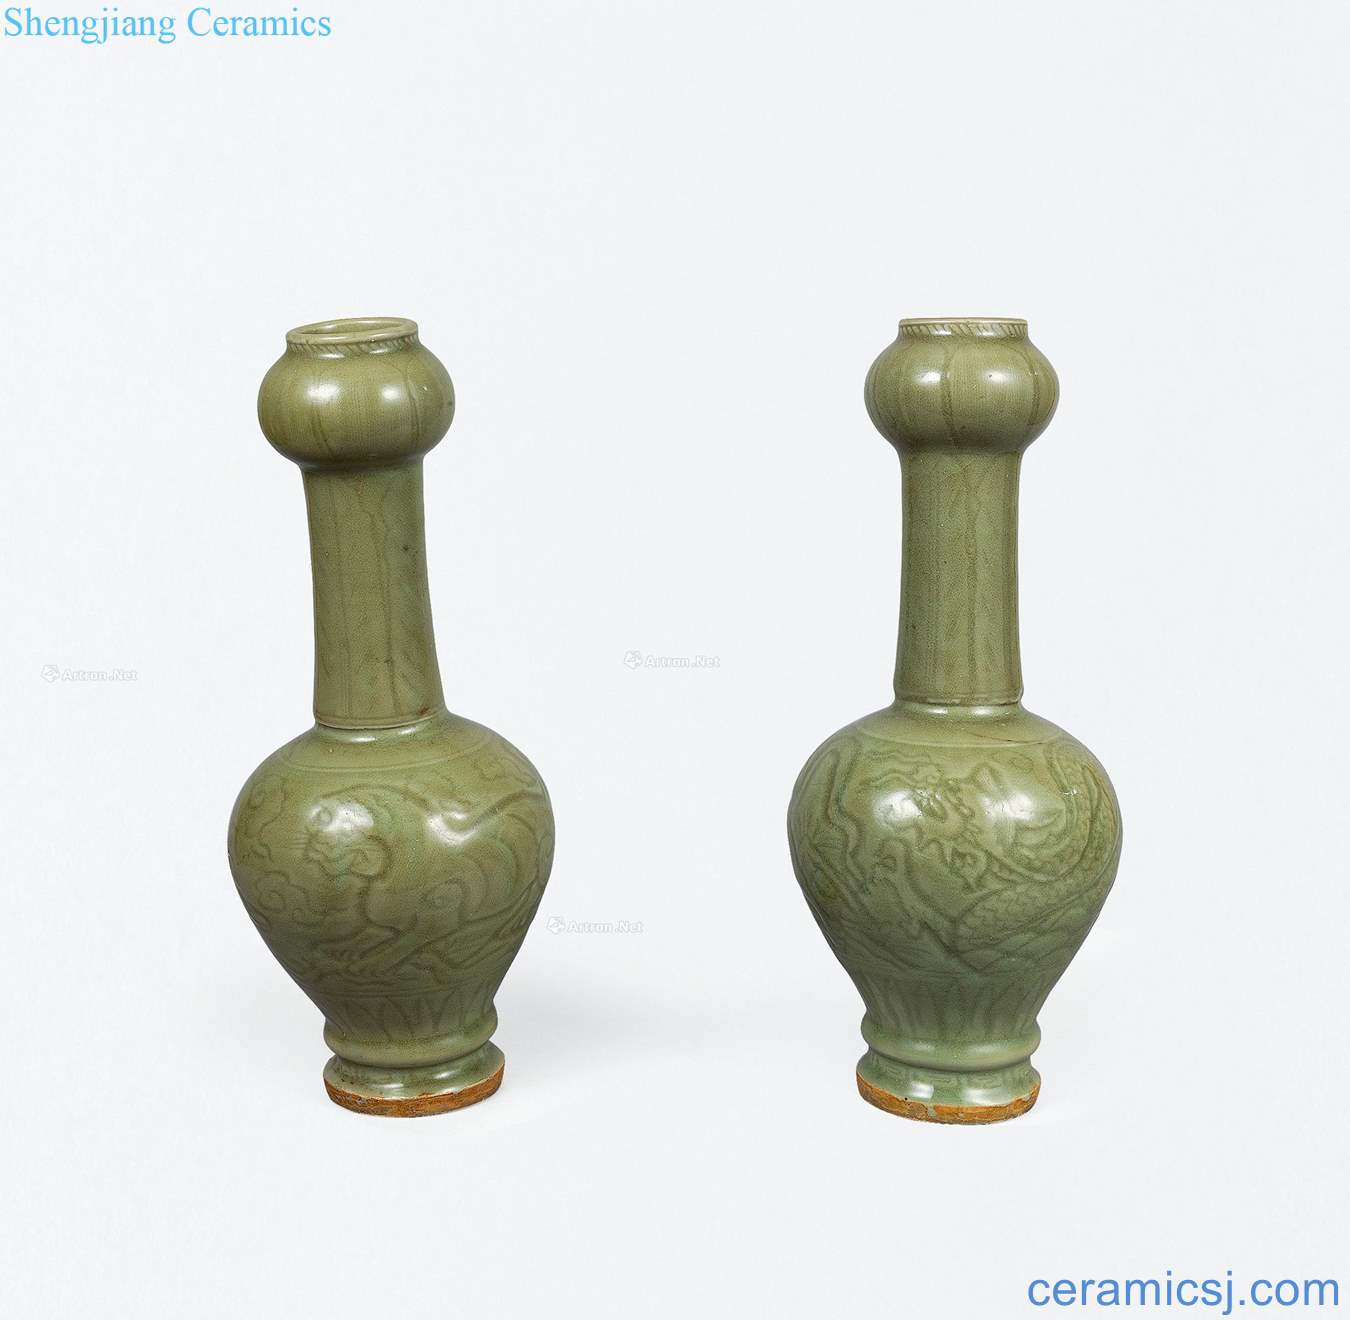 The yuan dynasty Longquan celadon green glaze dragon bottle (a)